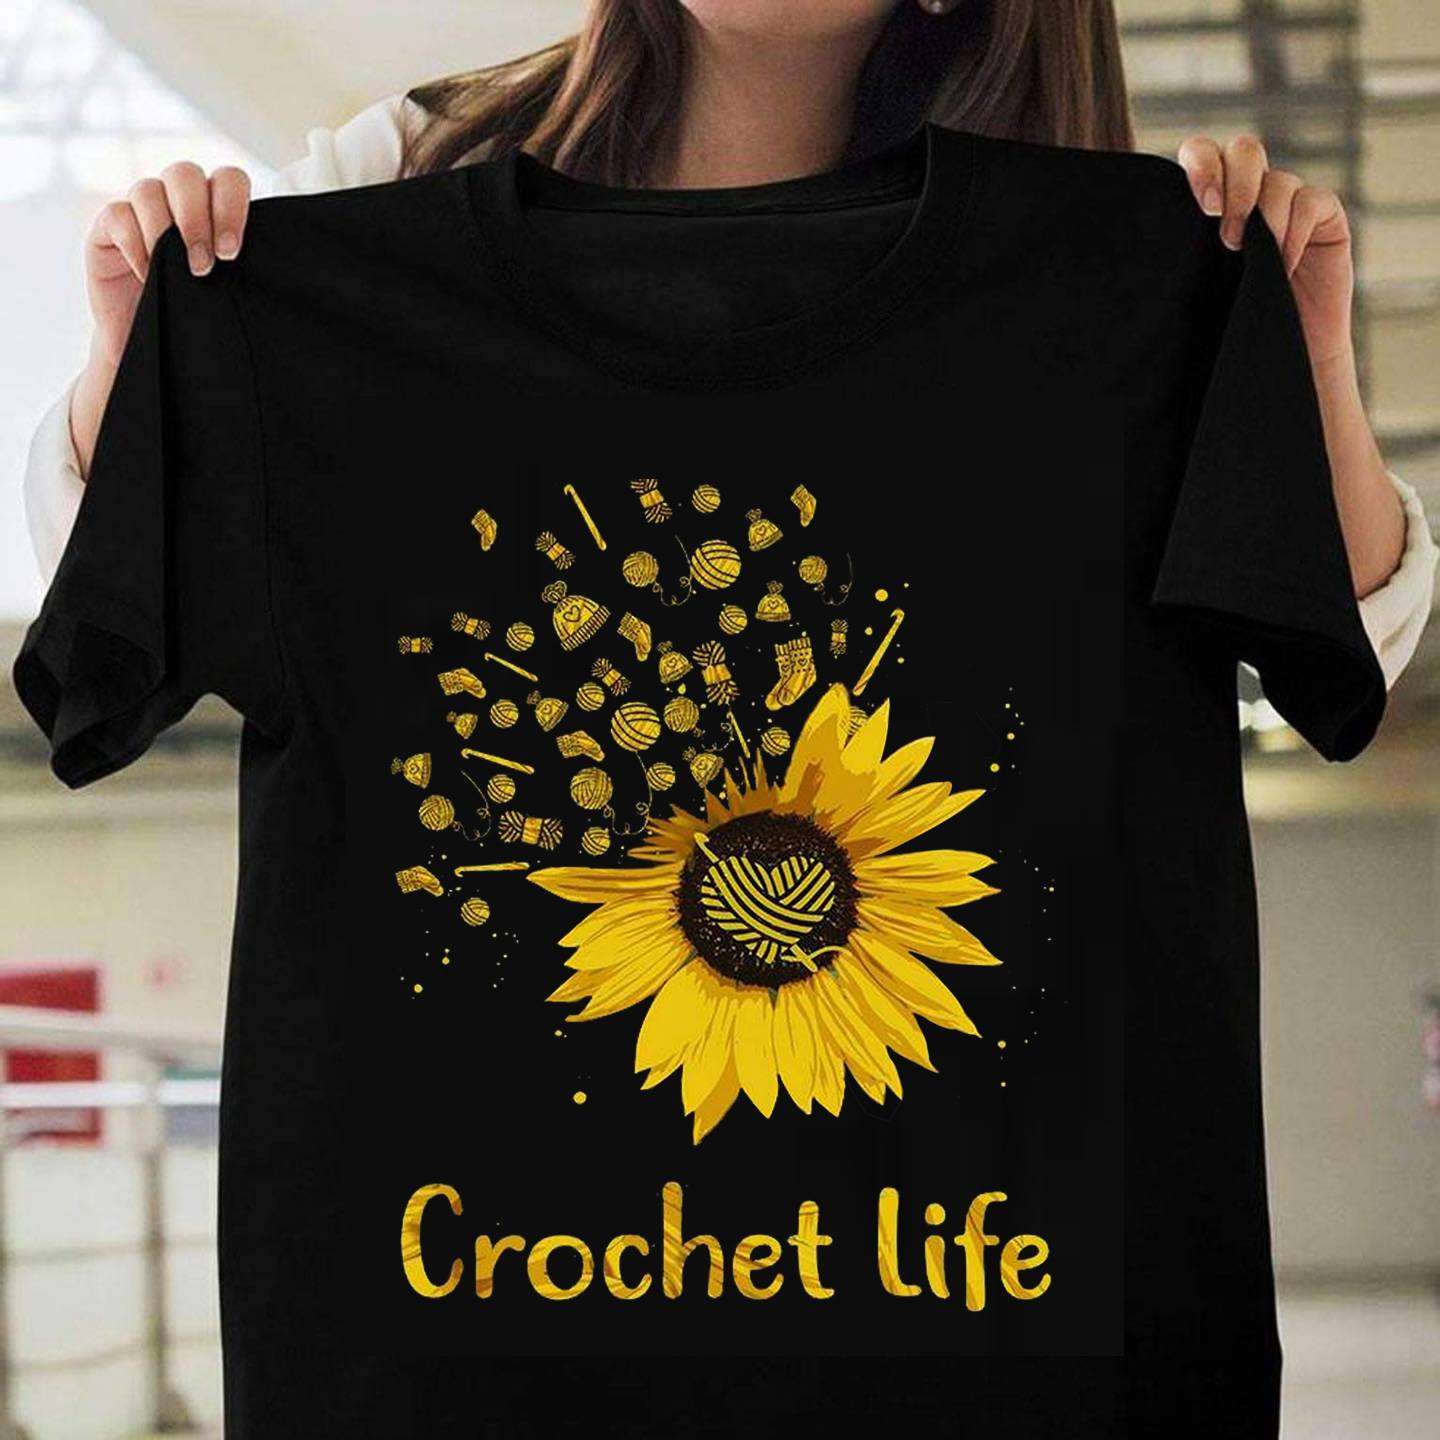 Crochet life - Crocheting lover, crocheting's tools